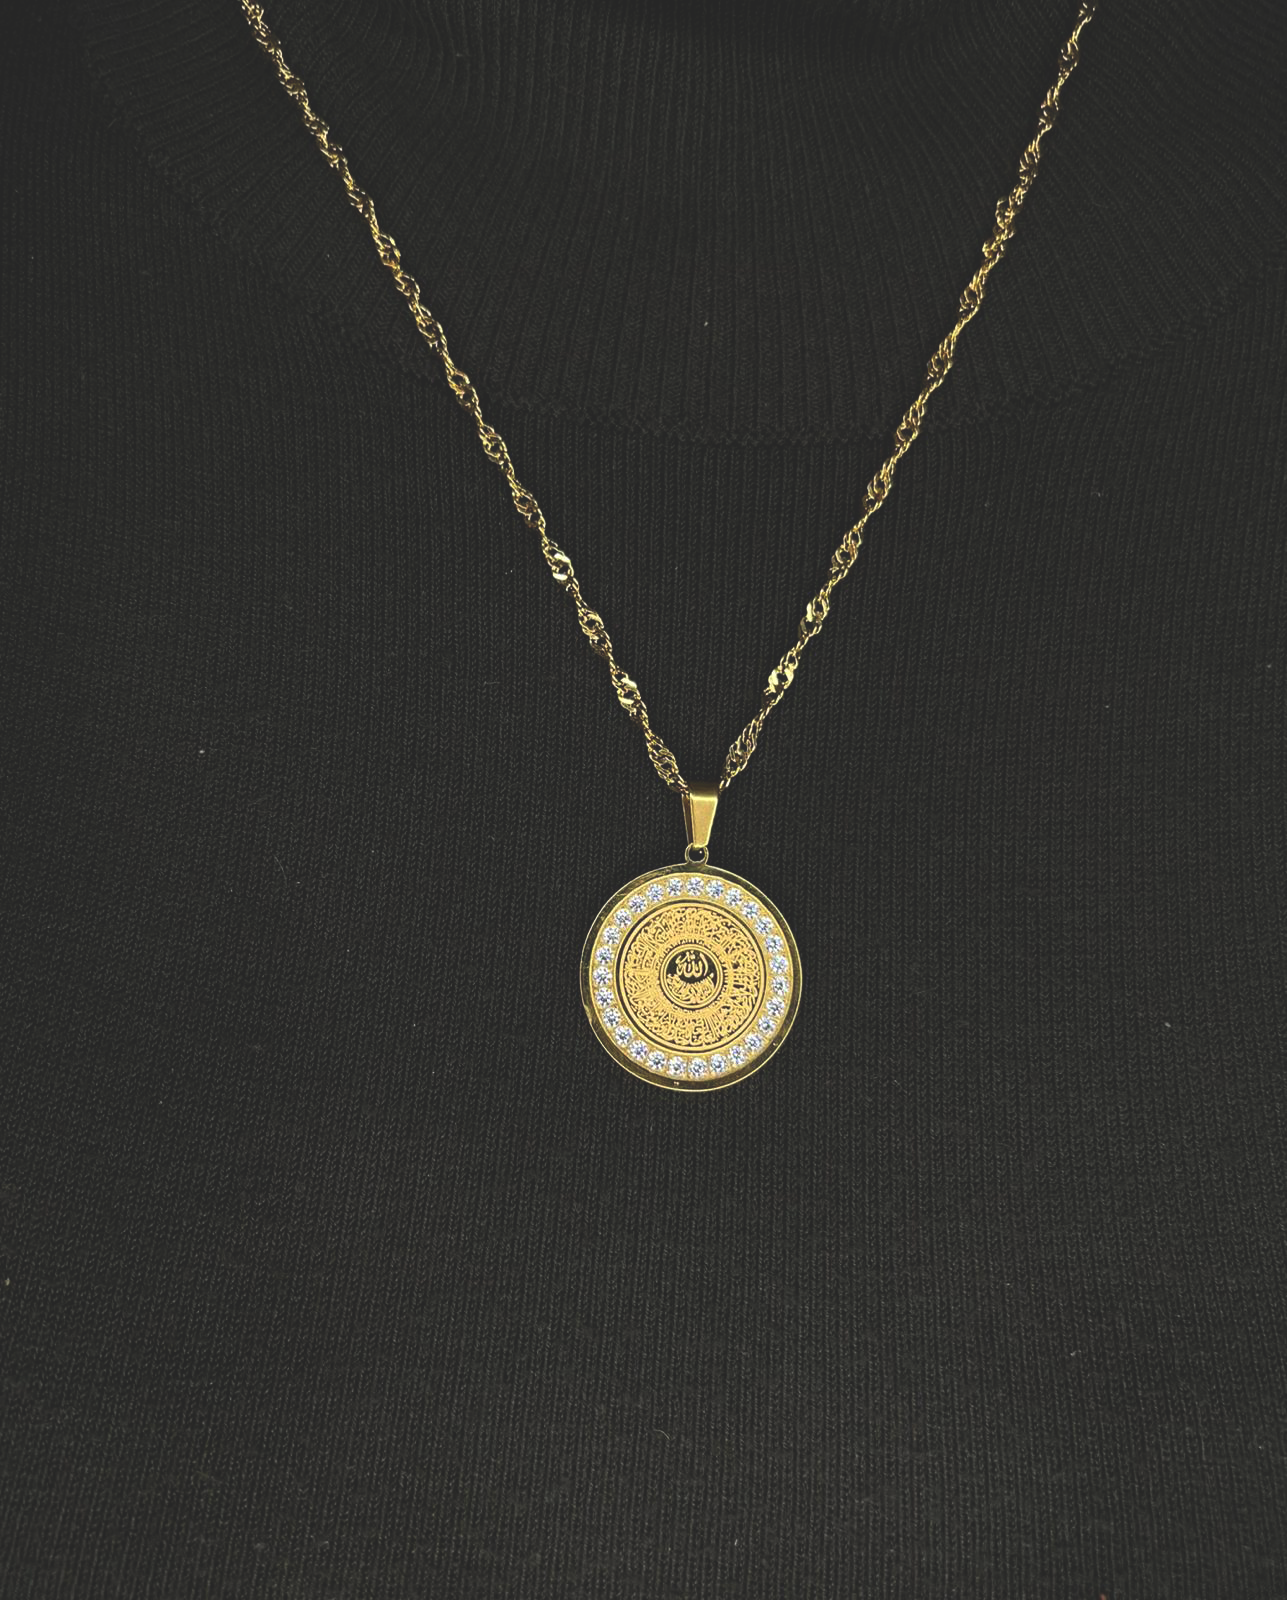 Ayatul kursi necklace with zirconia stones